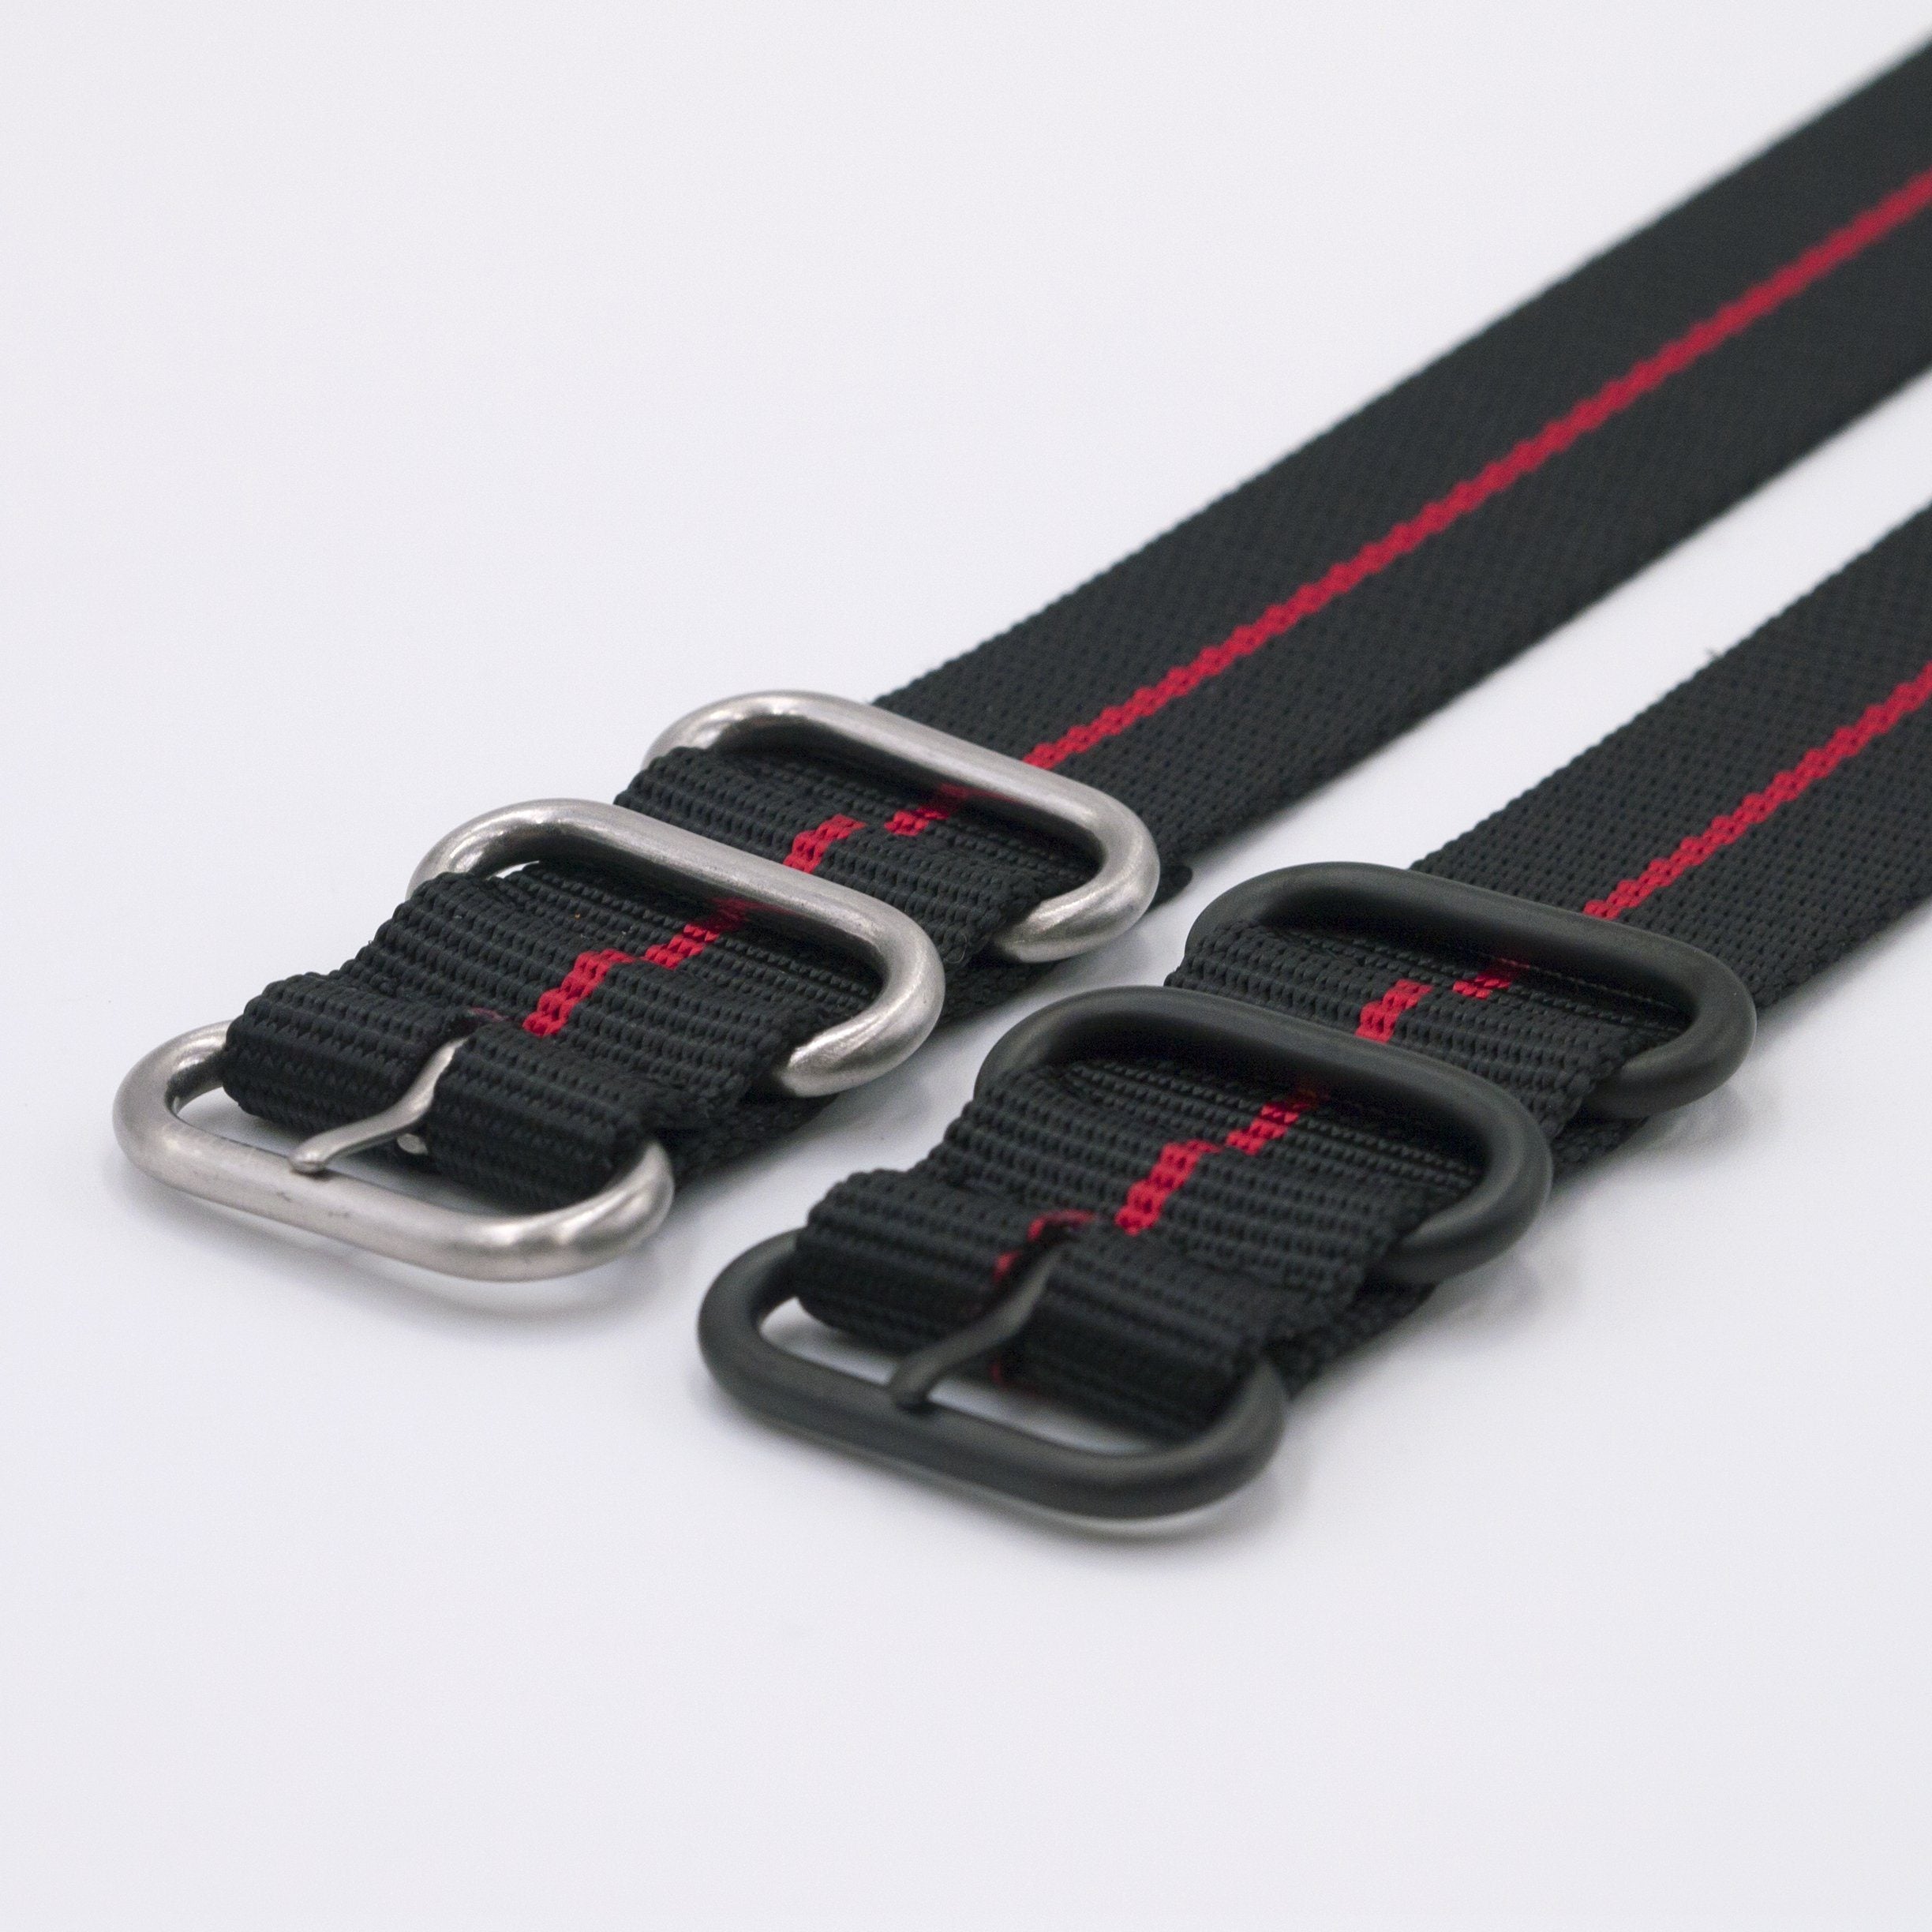 vario ballistic nylon red black stripe maratac strap with casio g shock adapter